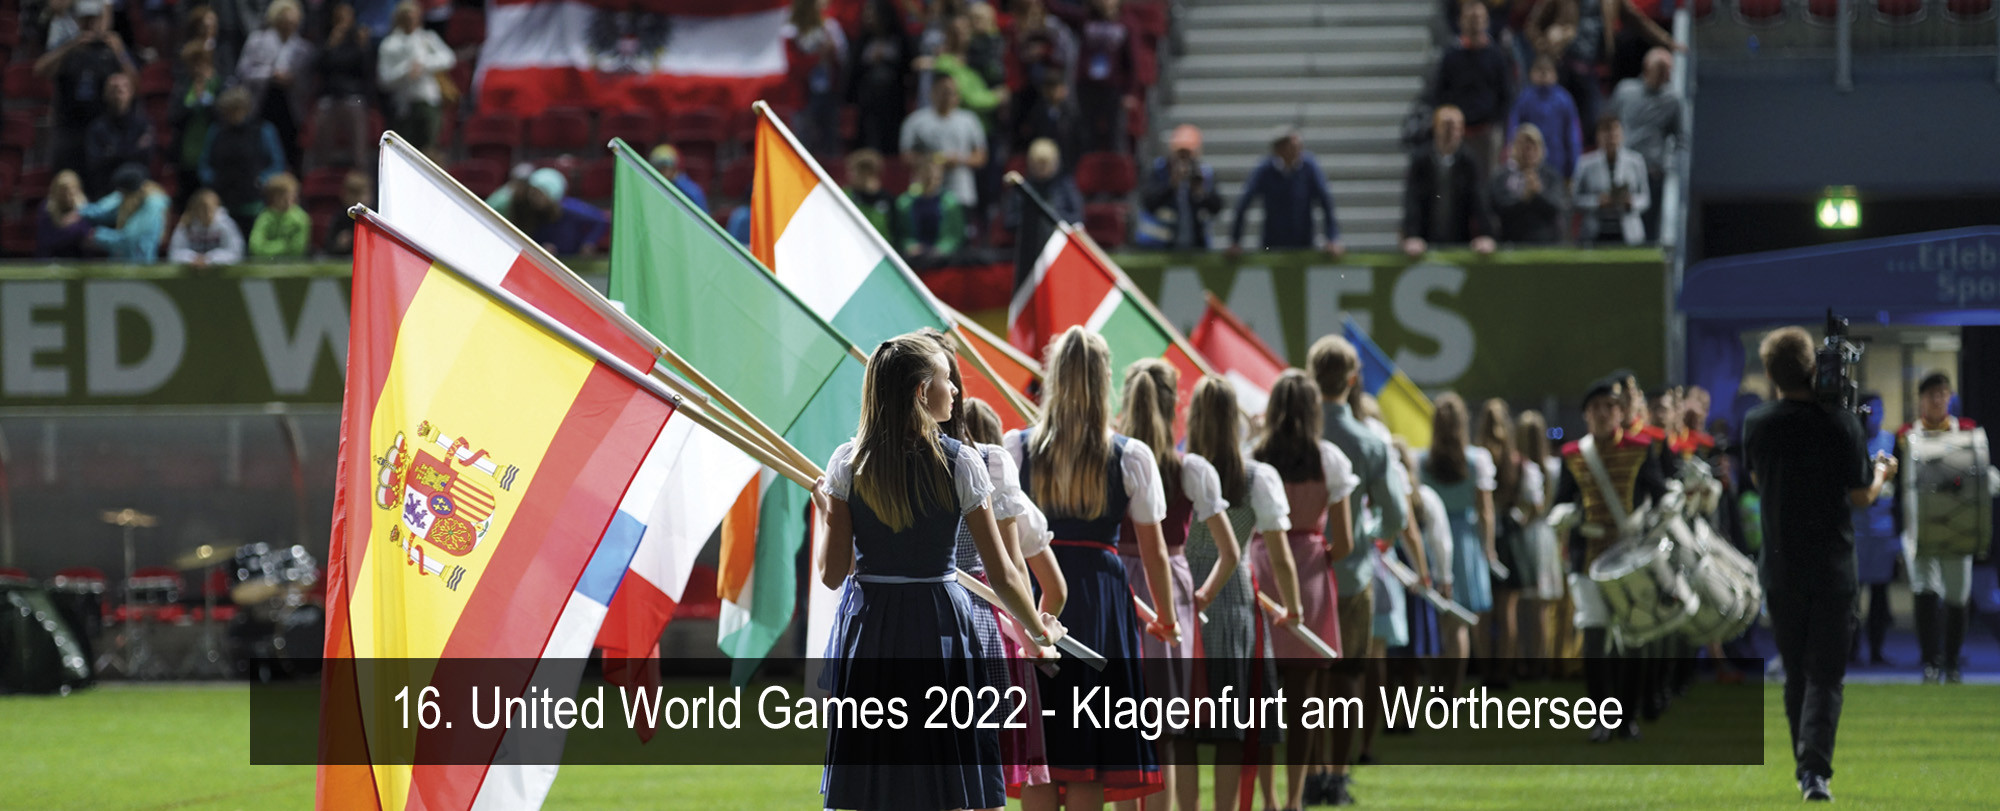 United World Games 2022